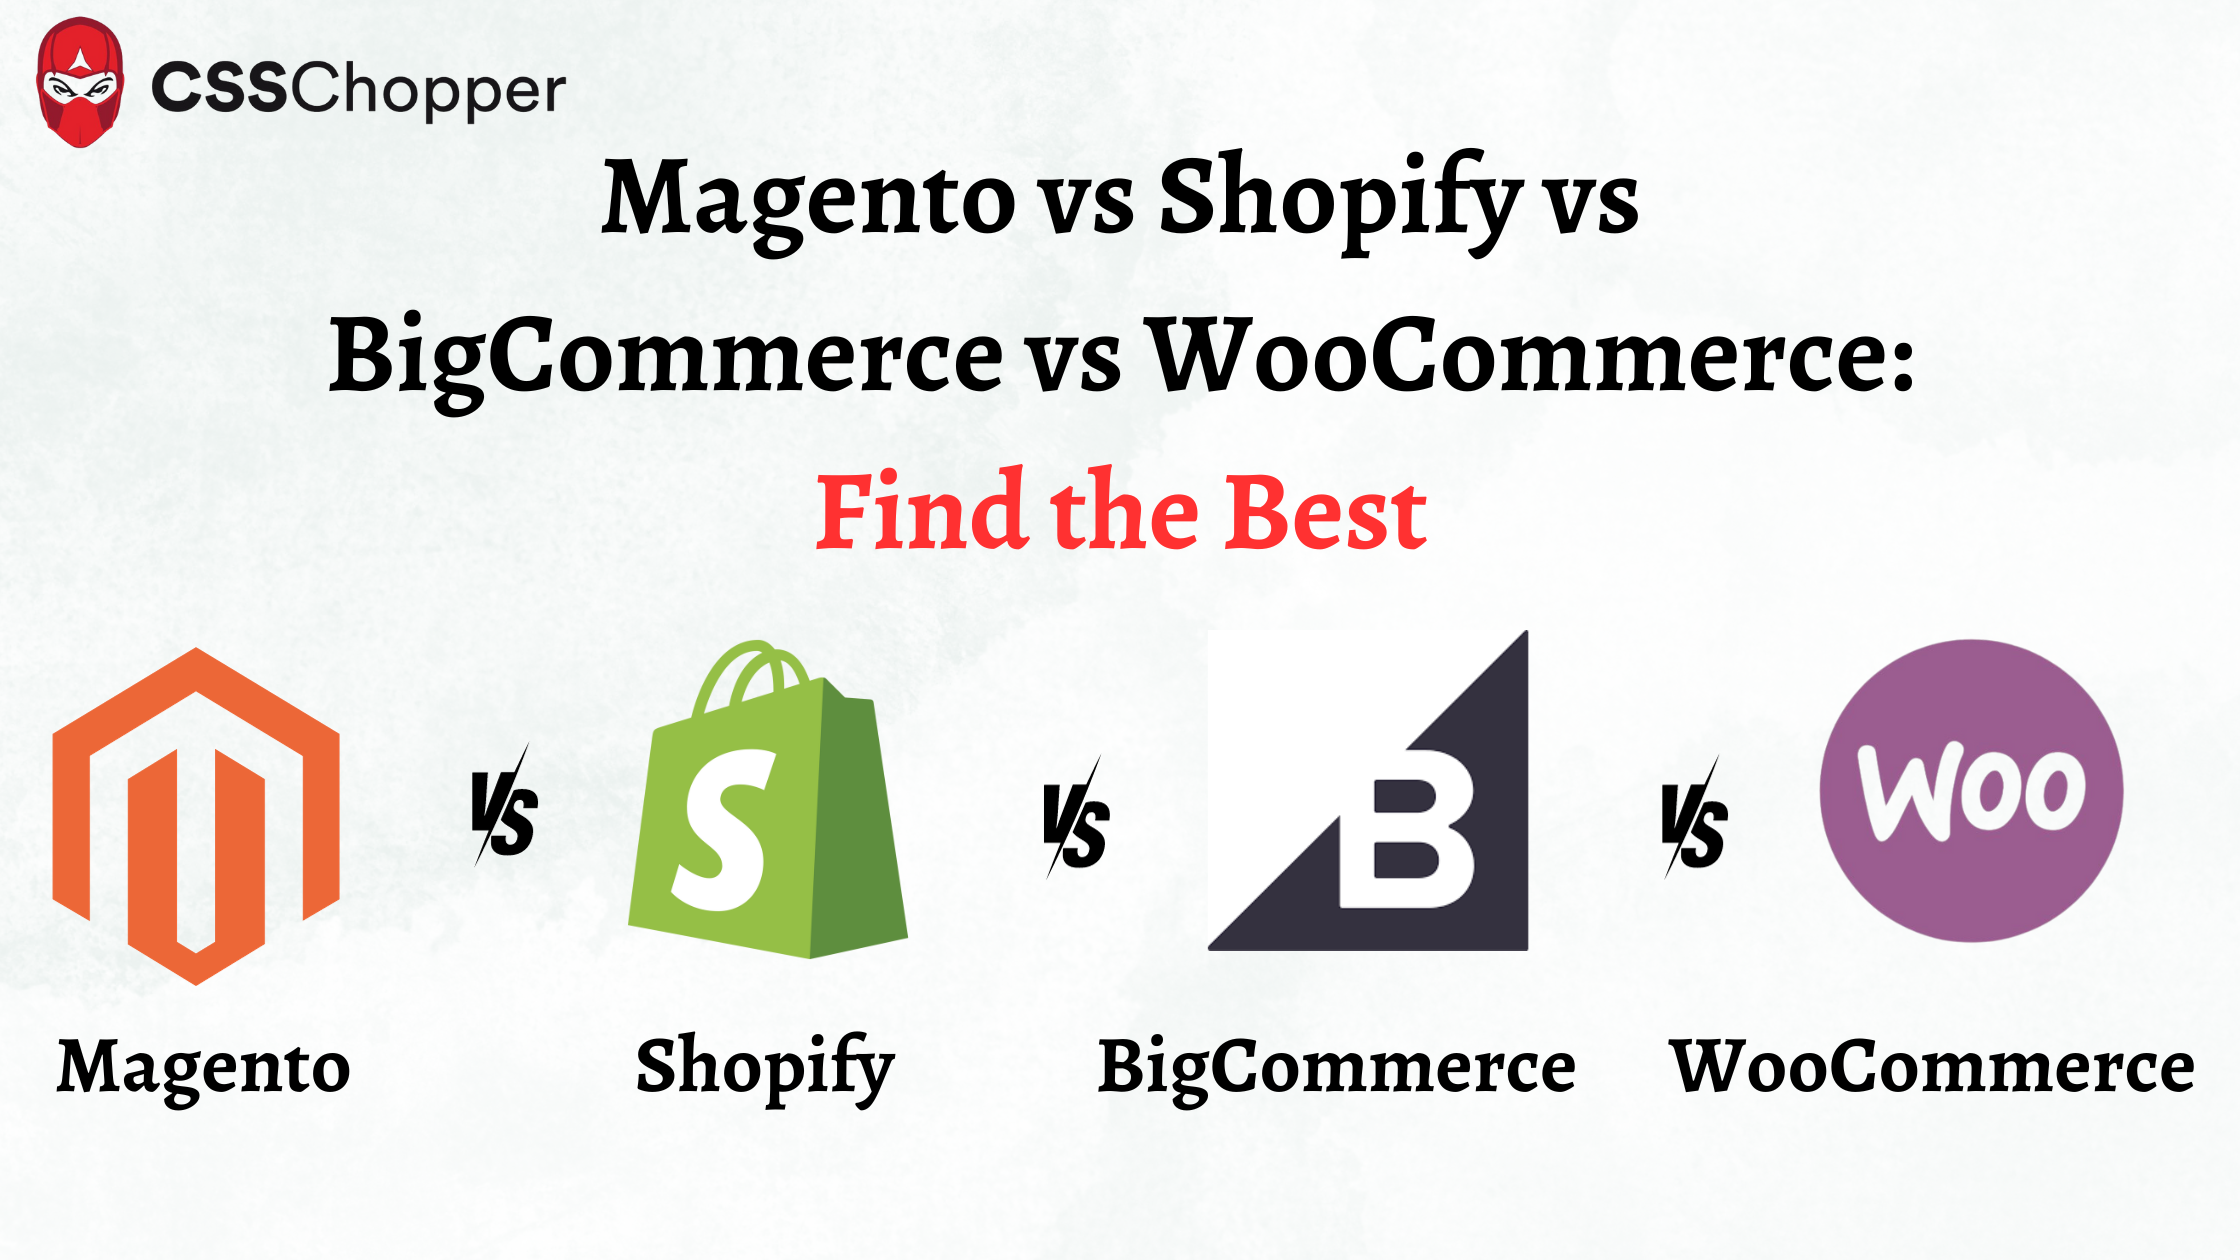 Magento vs Shopify vs BigCommerce vs WooCommerce: Find the Best